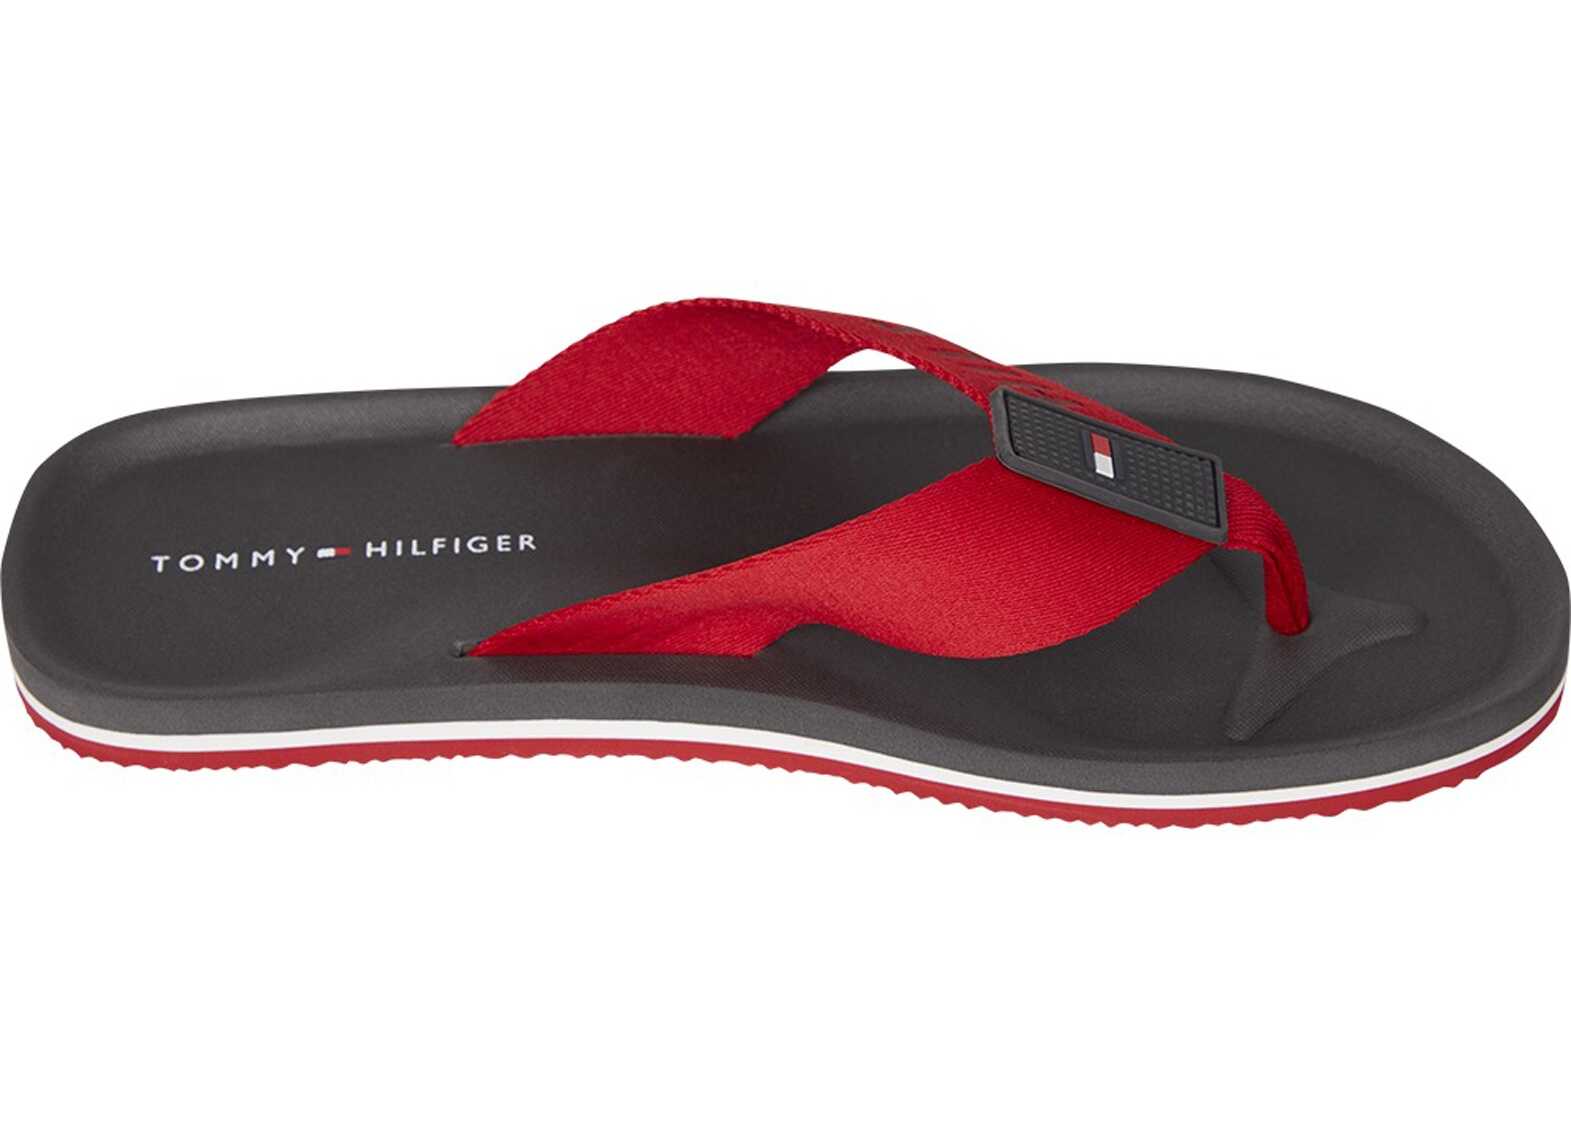 Tommy Hilfiger Classic Comfort Flip-Flops Black/Red b-mall.ro